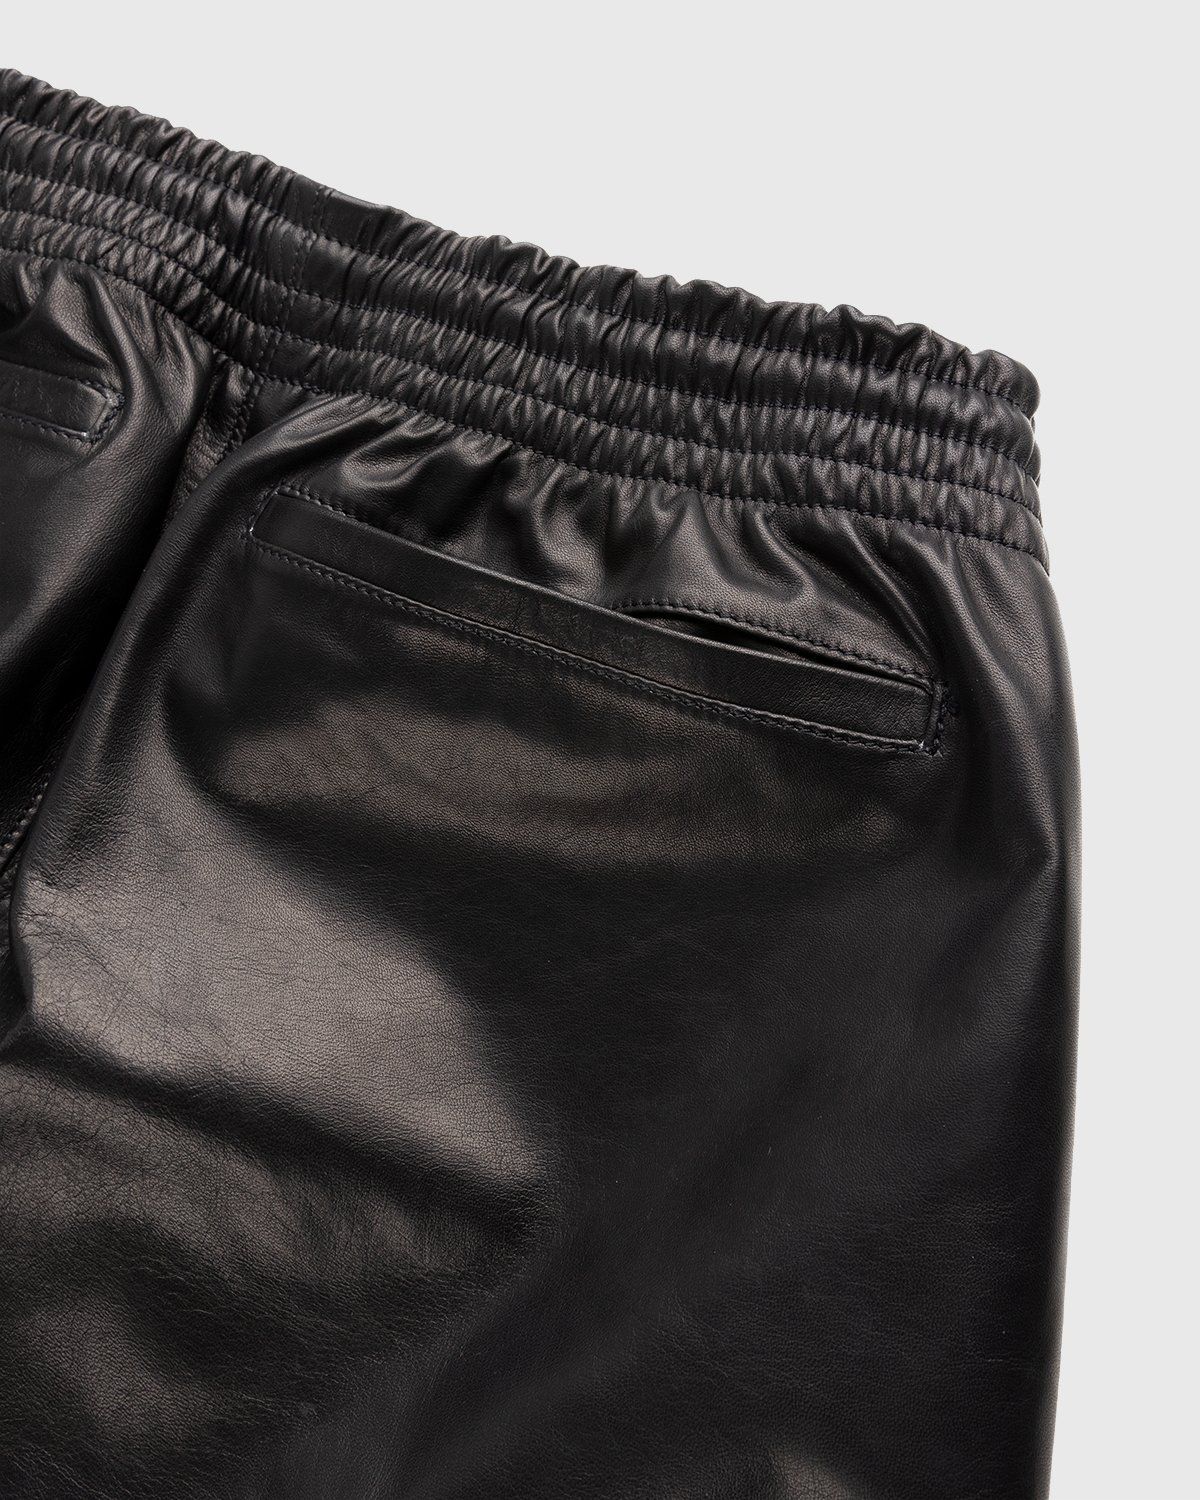 Highsnobiety x Butcherei Lindinger – Shorts Black - Shorts - Black - Image 3